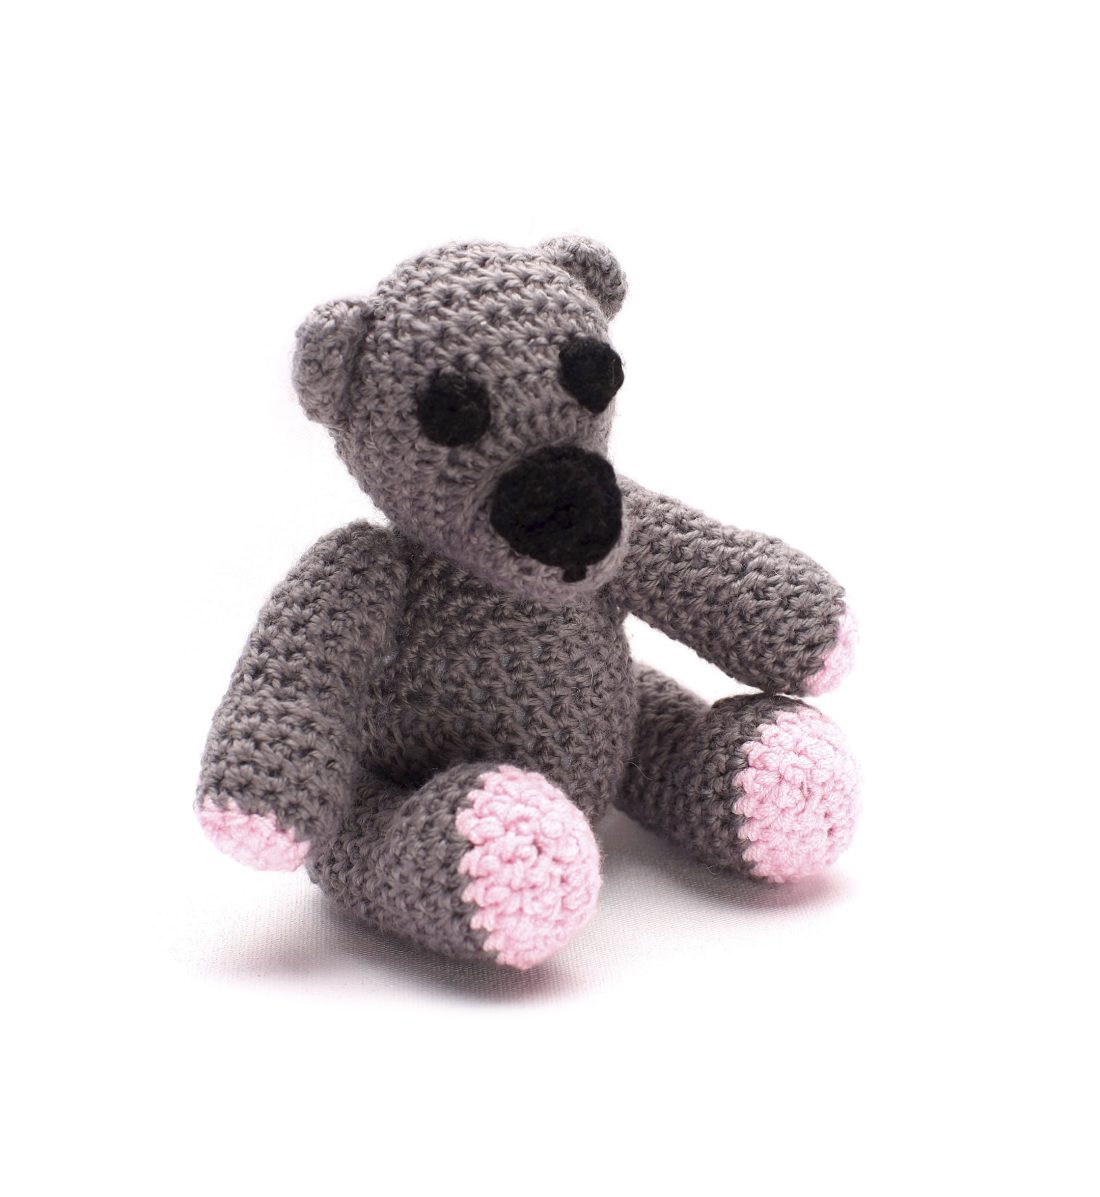 Cute Baby Teddy bear with the Rattle inside 1045 grey